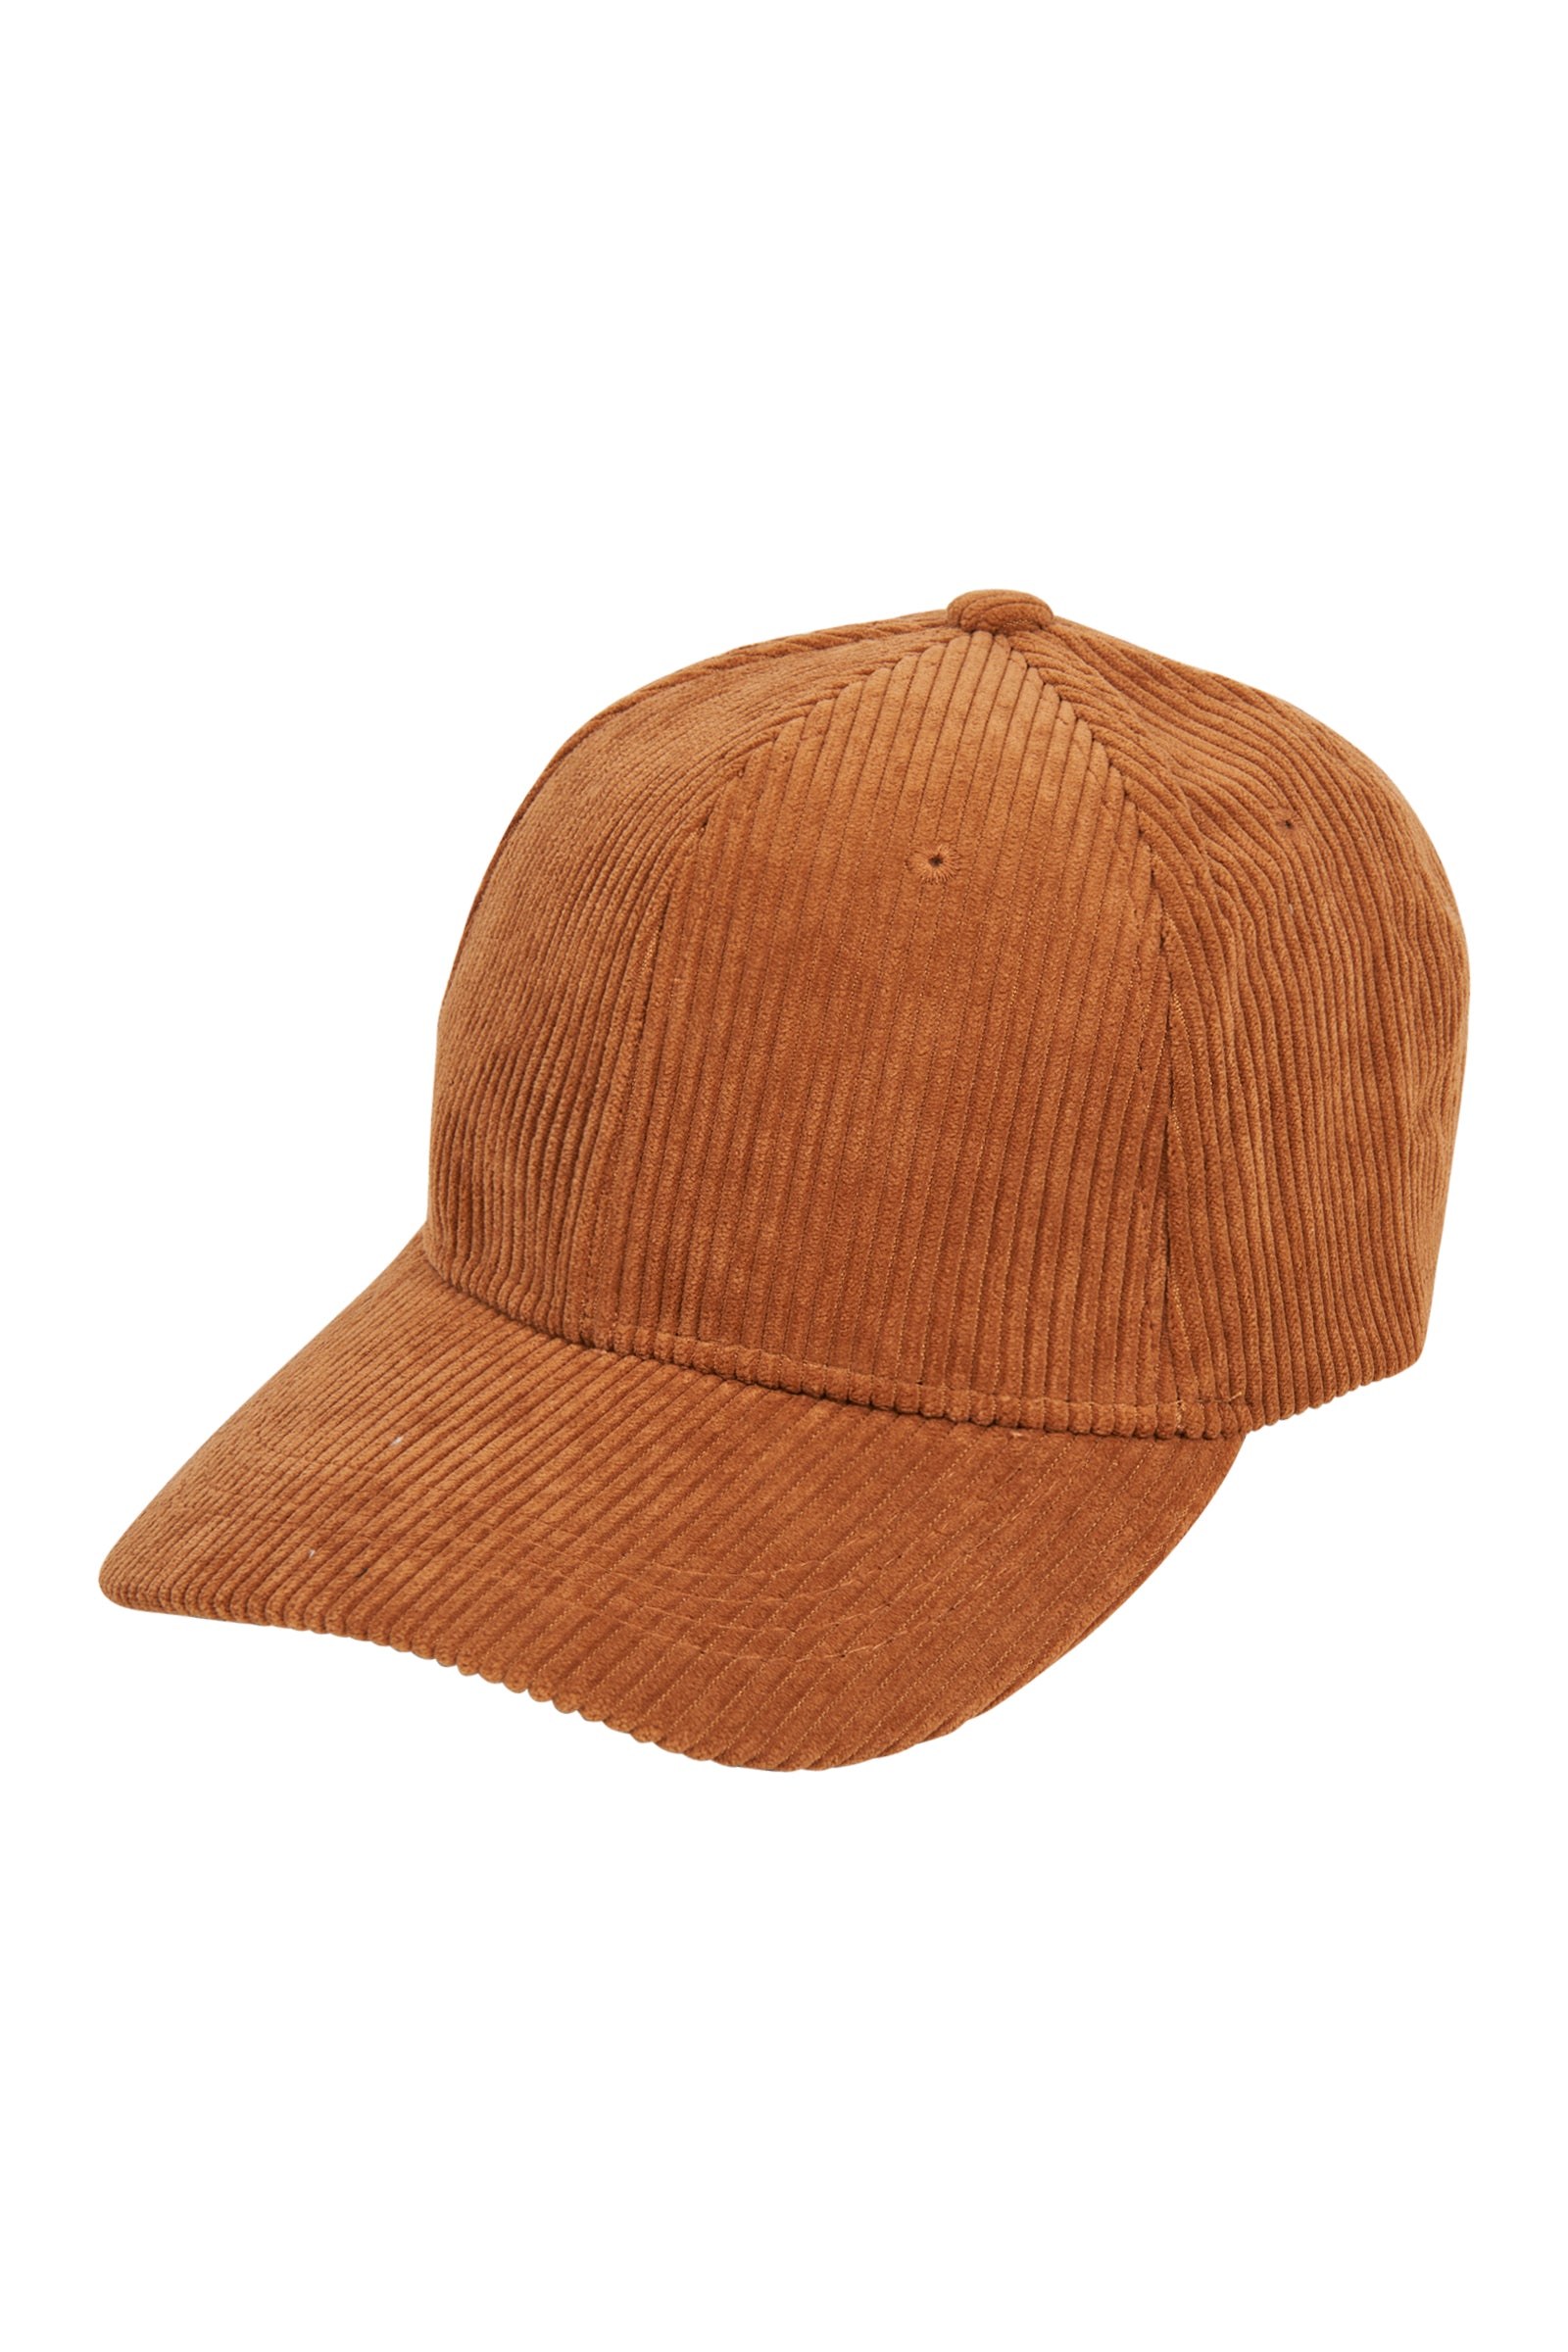 Paarl Cap - Ochre - eb&ive Hat